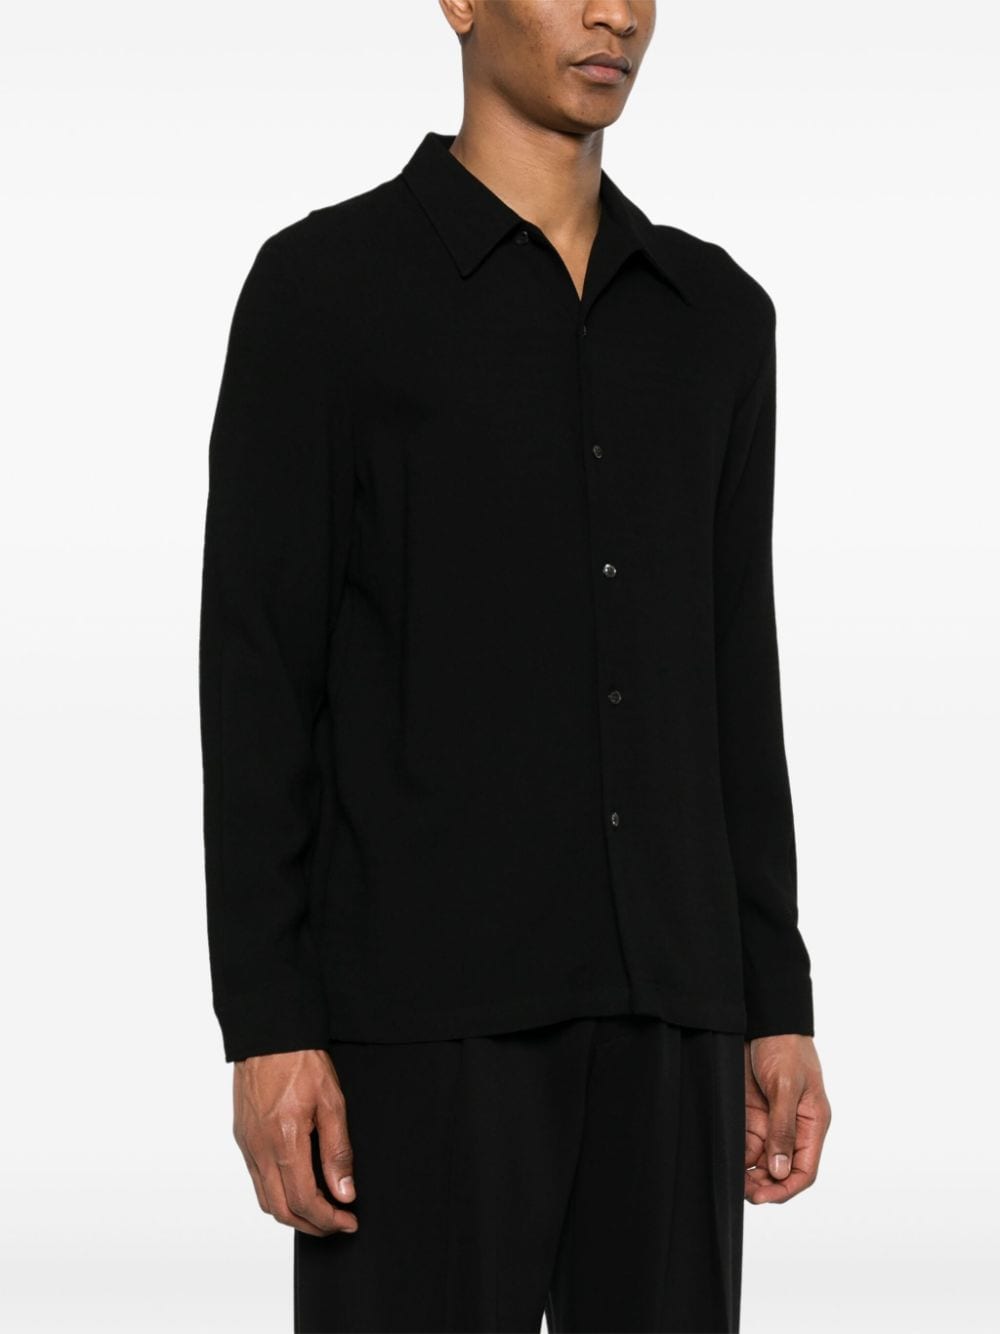 Black crepe shirt